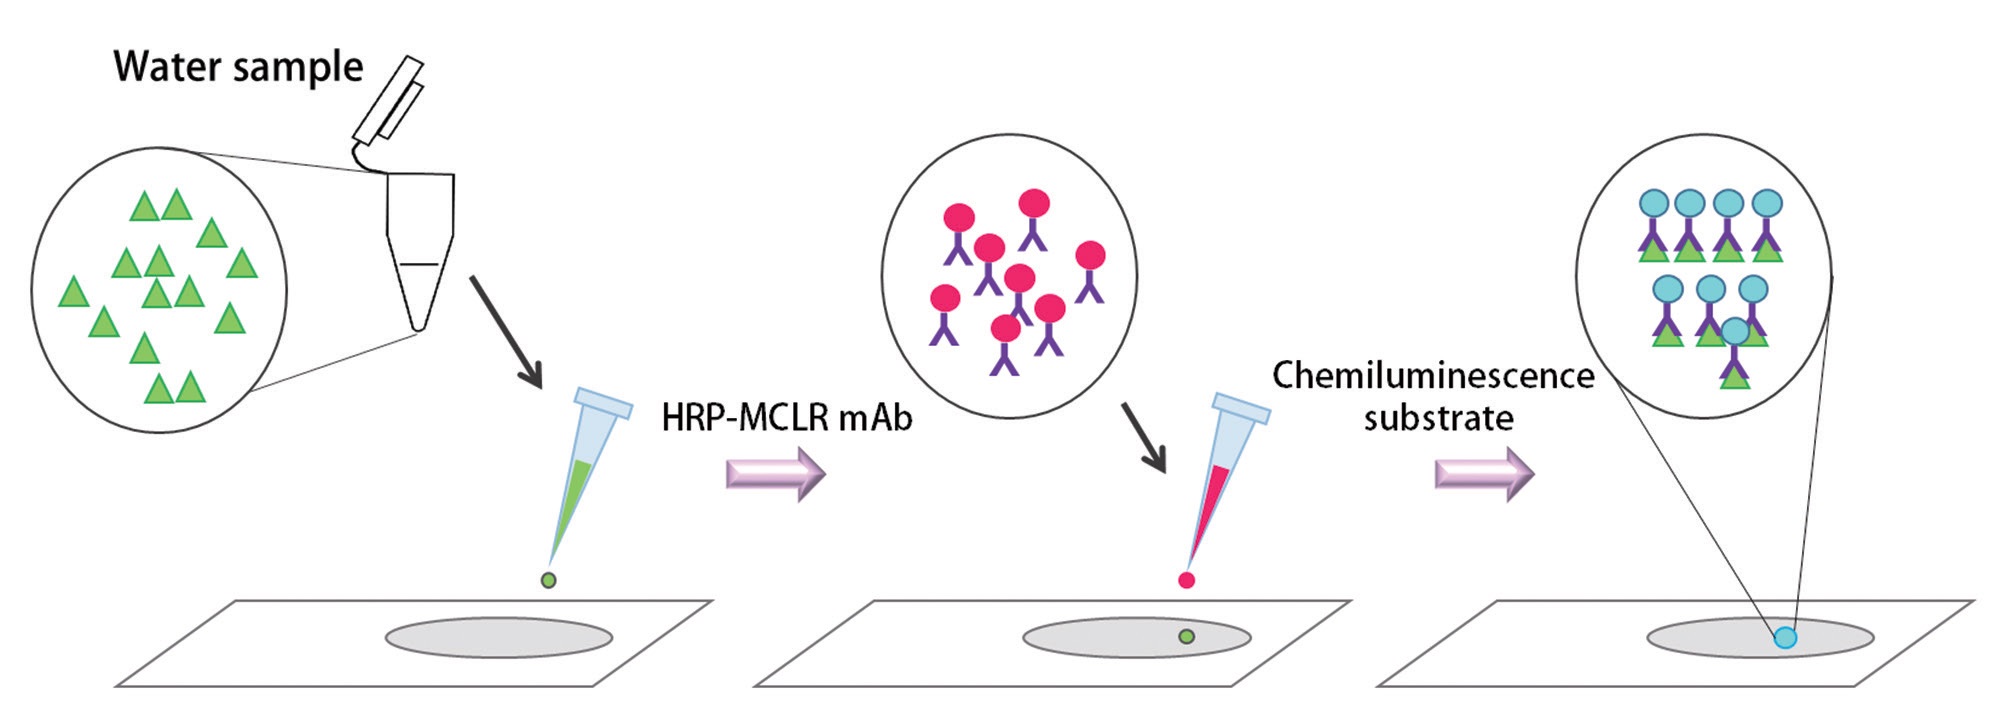 A schematic diagram of chemiluminescence immunochromatographic assay system. HRP, horse radish peroxidase; MCLR, microcystin-LR-biotin conjugate.